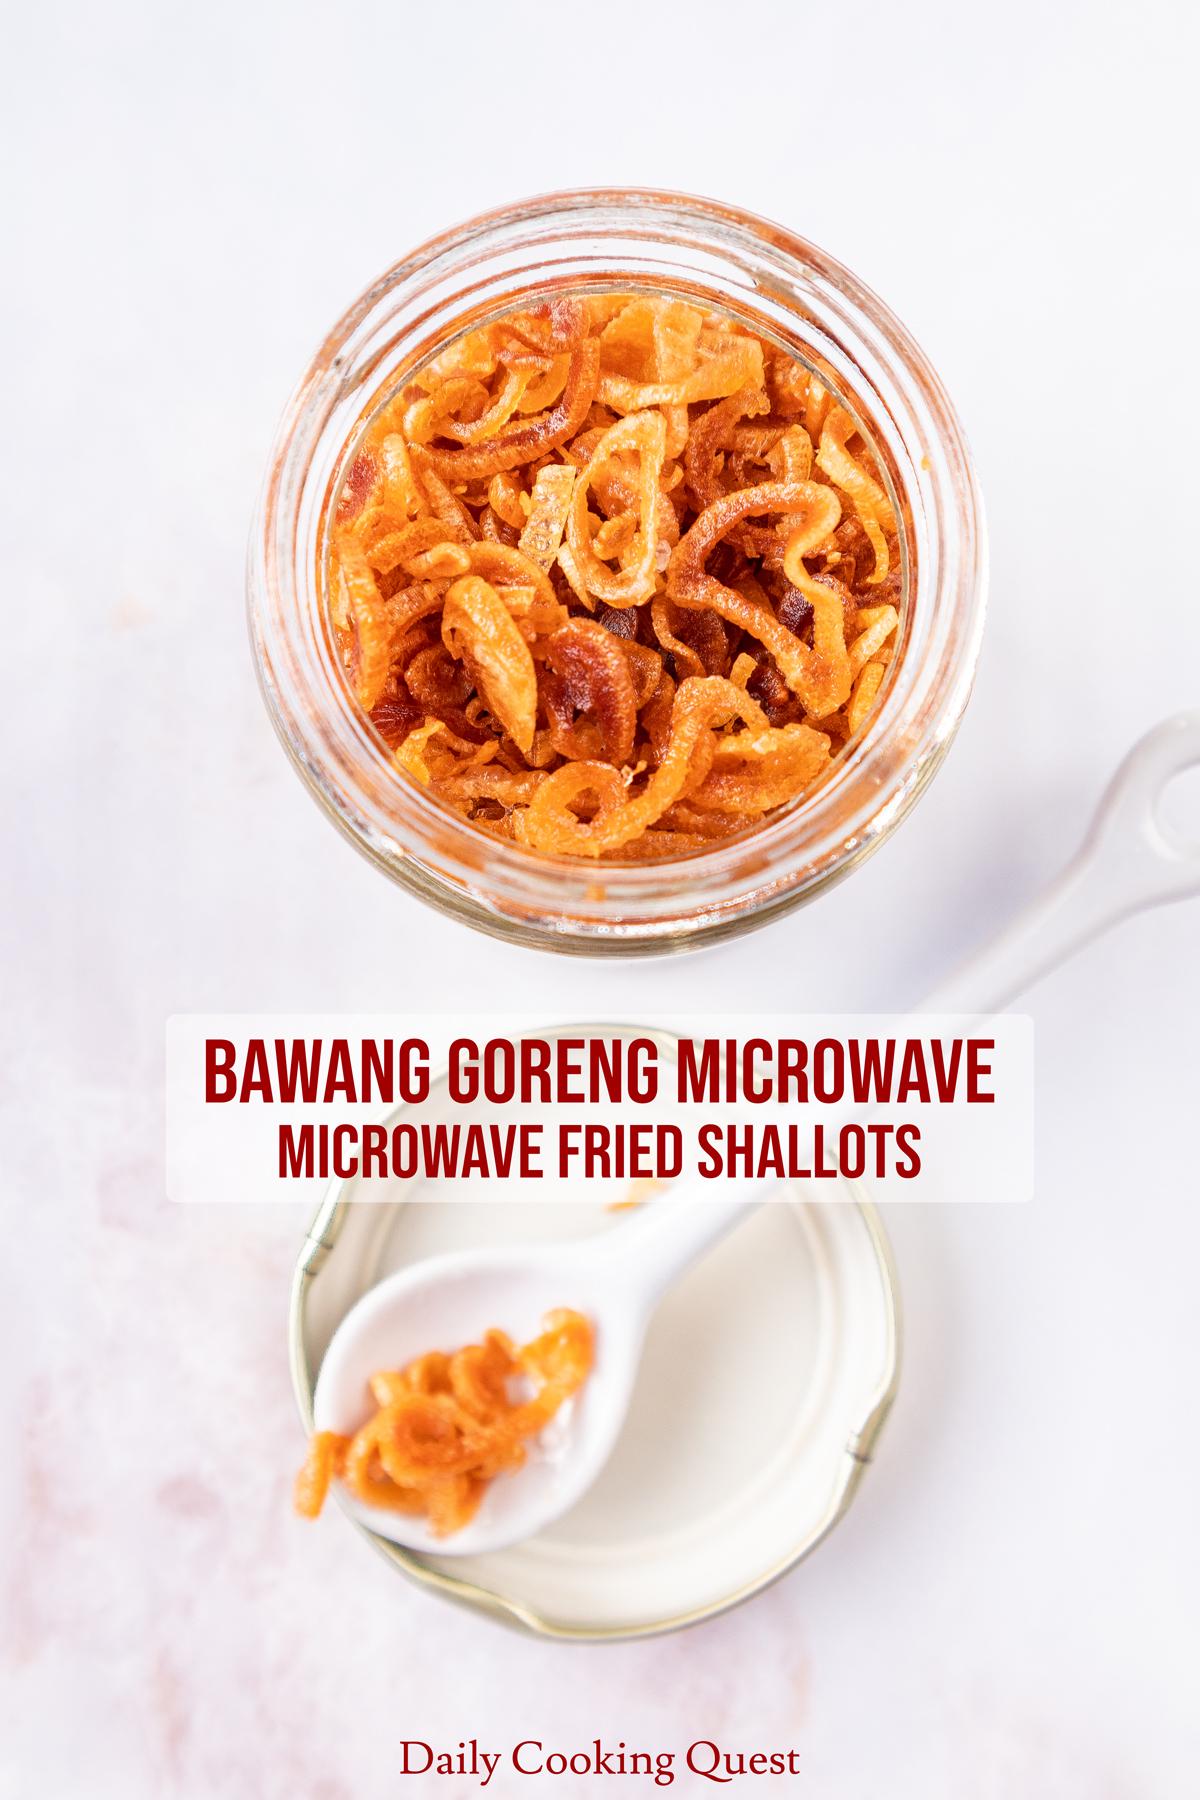 Bawang goreng microwave - microwave fried shallots.